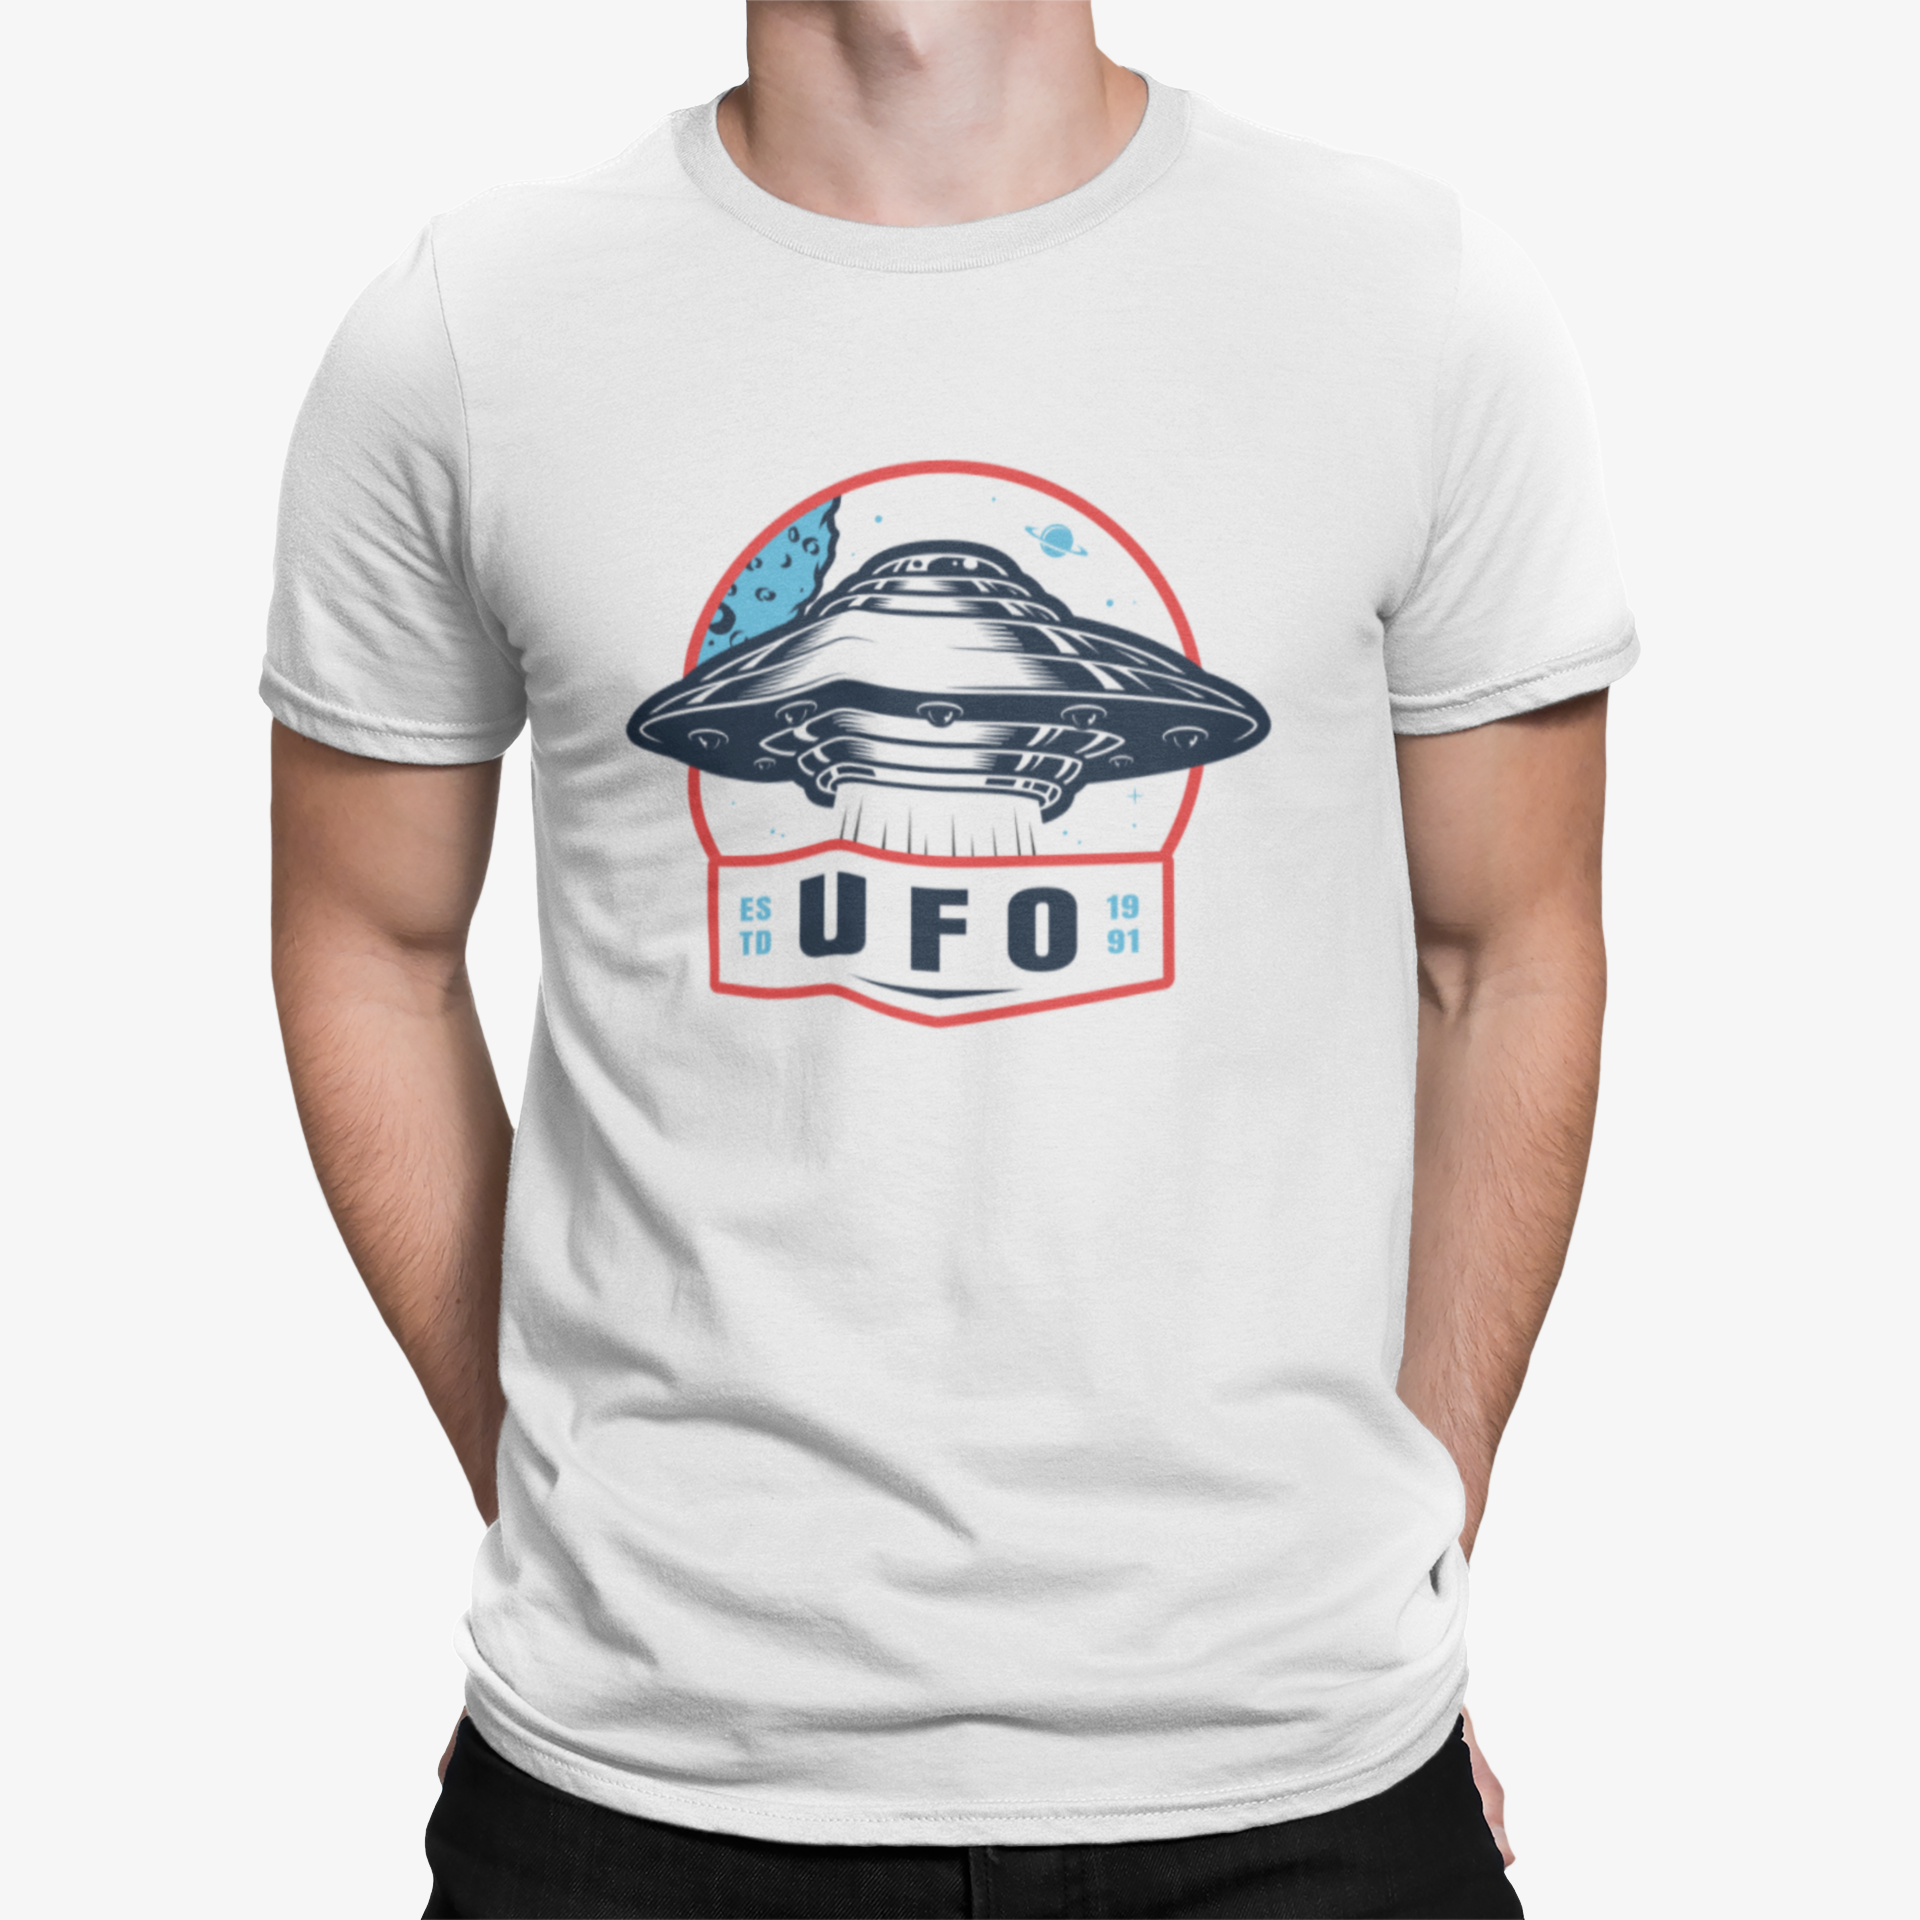 Camiseta Silver Ufo 1991